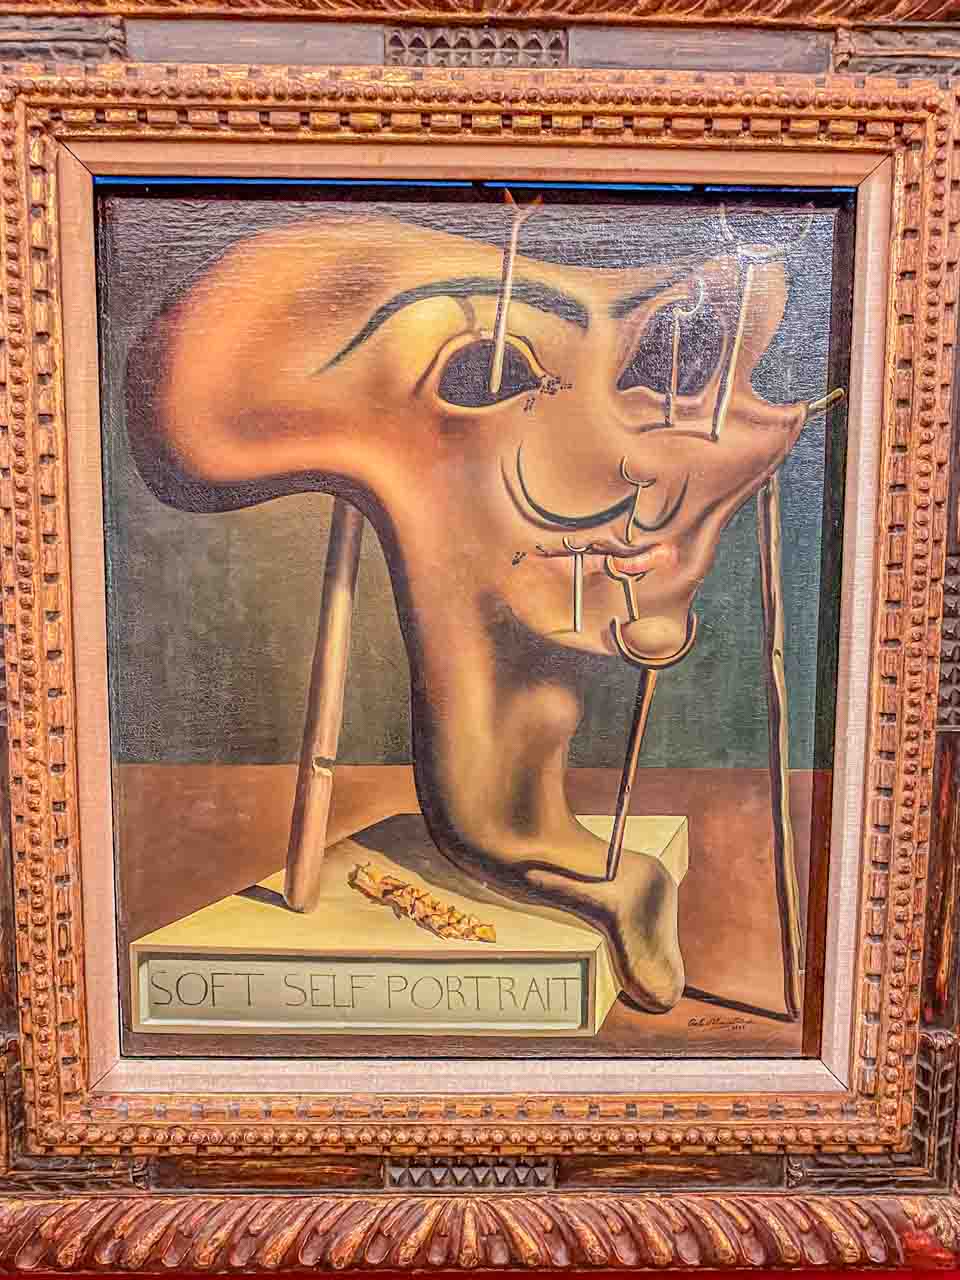 A self-portrait painting by the surrealist artist, Salvador Dali.